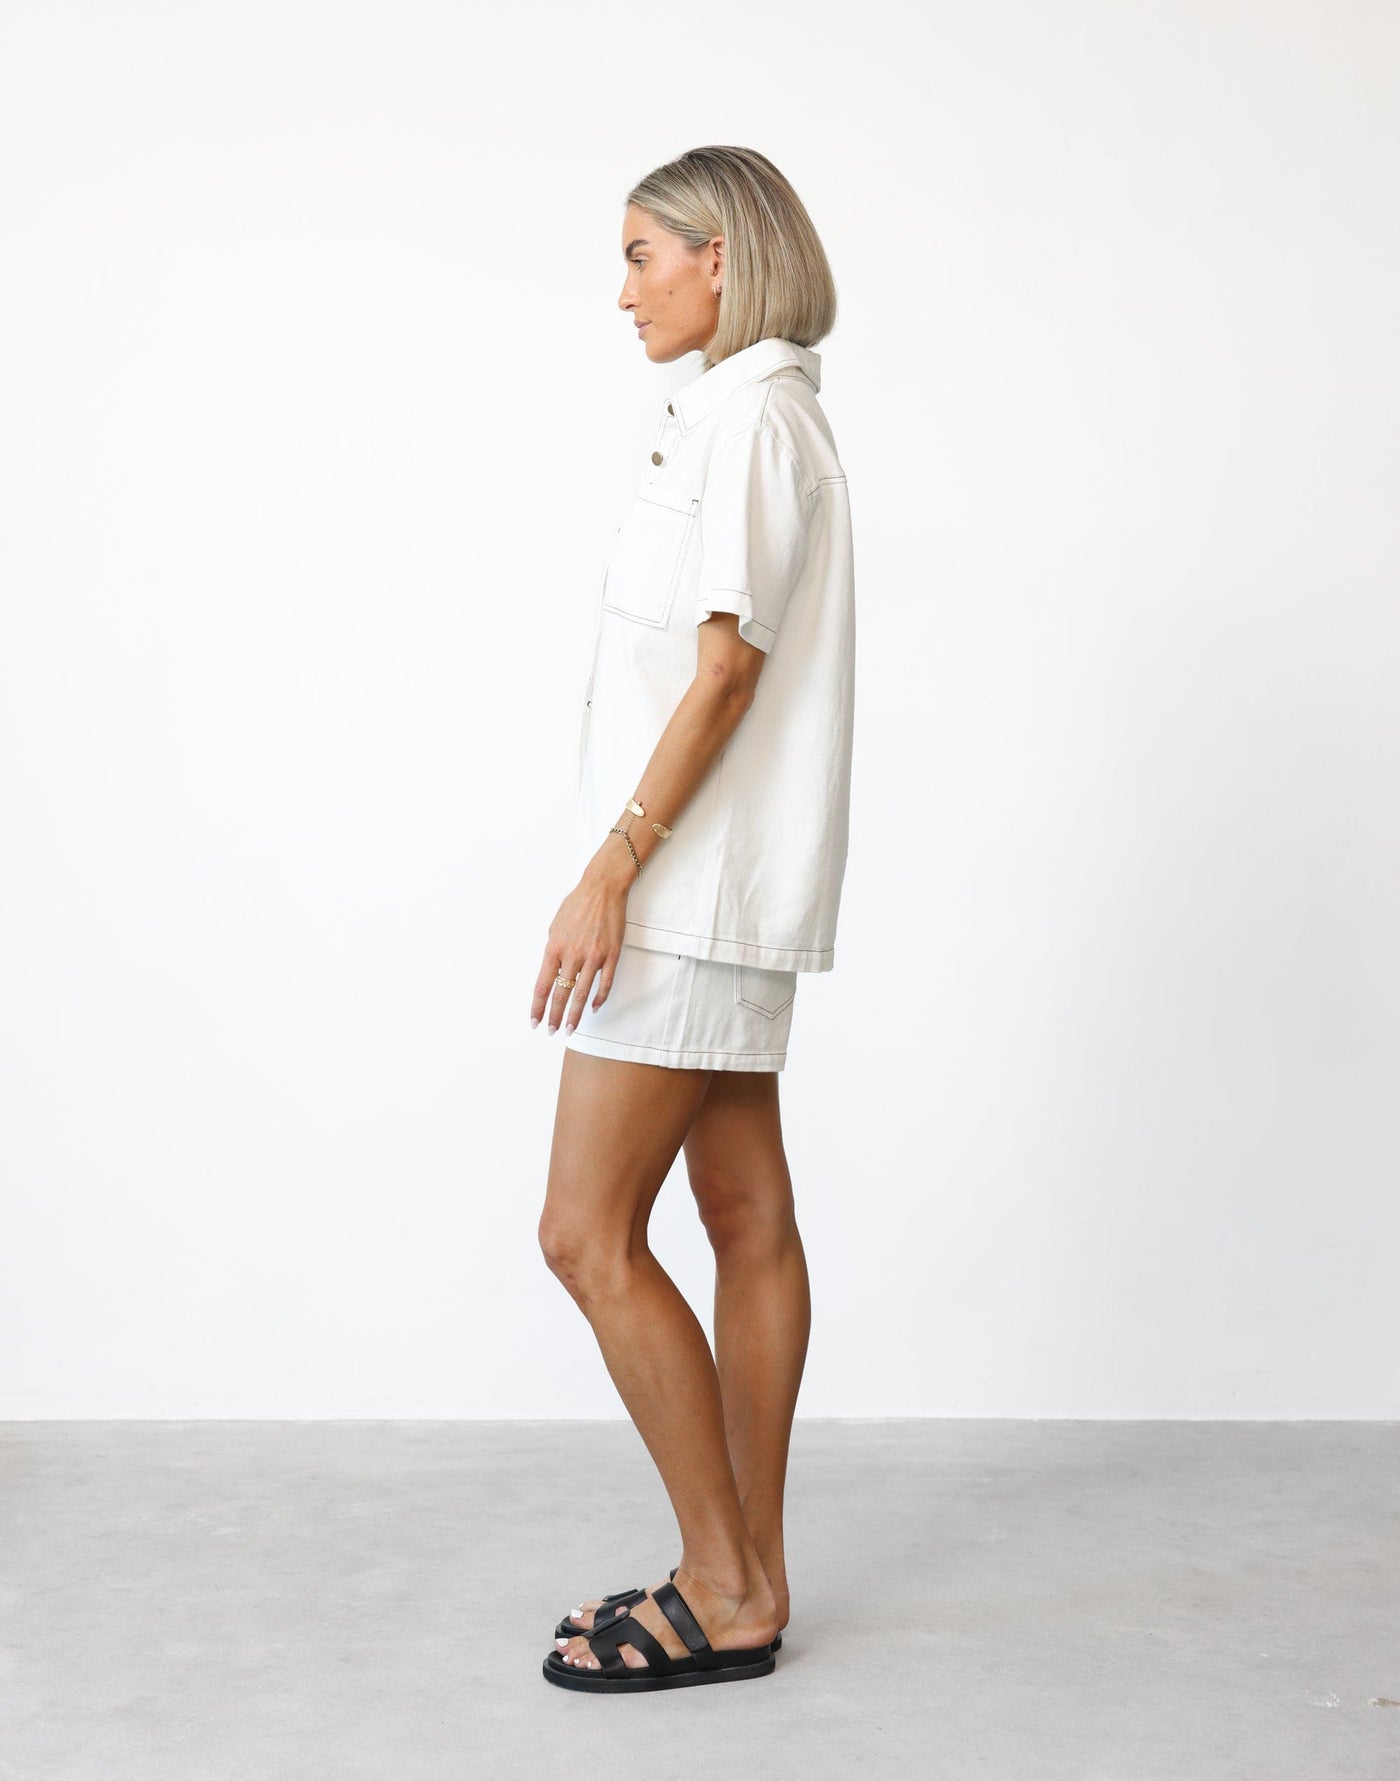 Elizha Shirt (White) - Button Up Pocket Detail Shirt - Women's Top - Charcoal Clothing